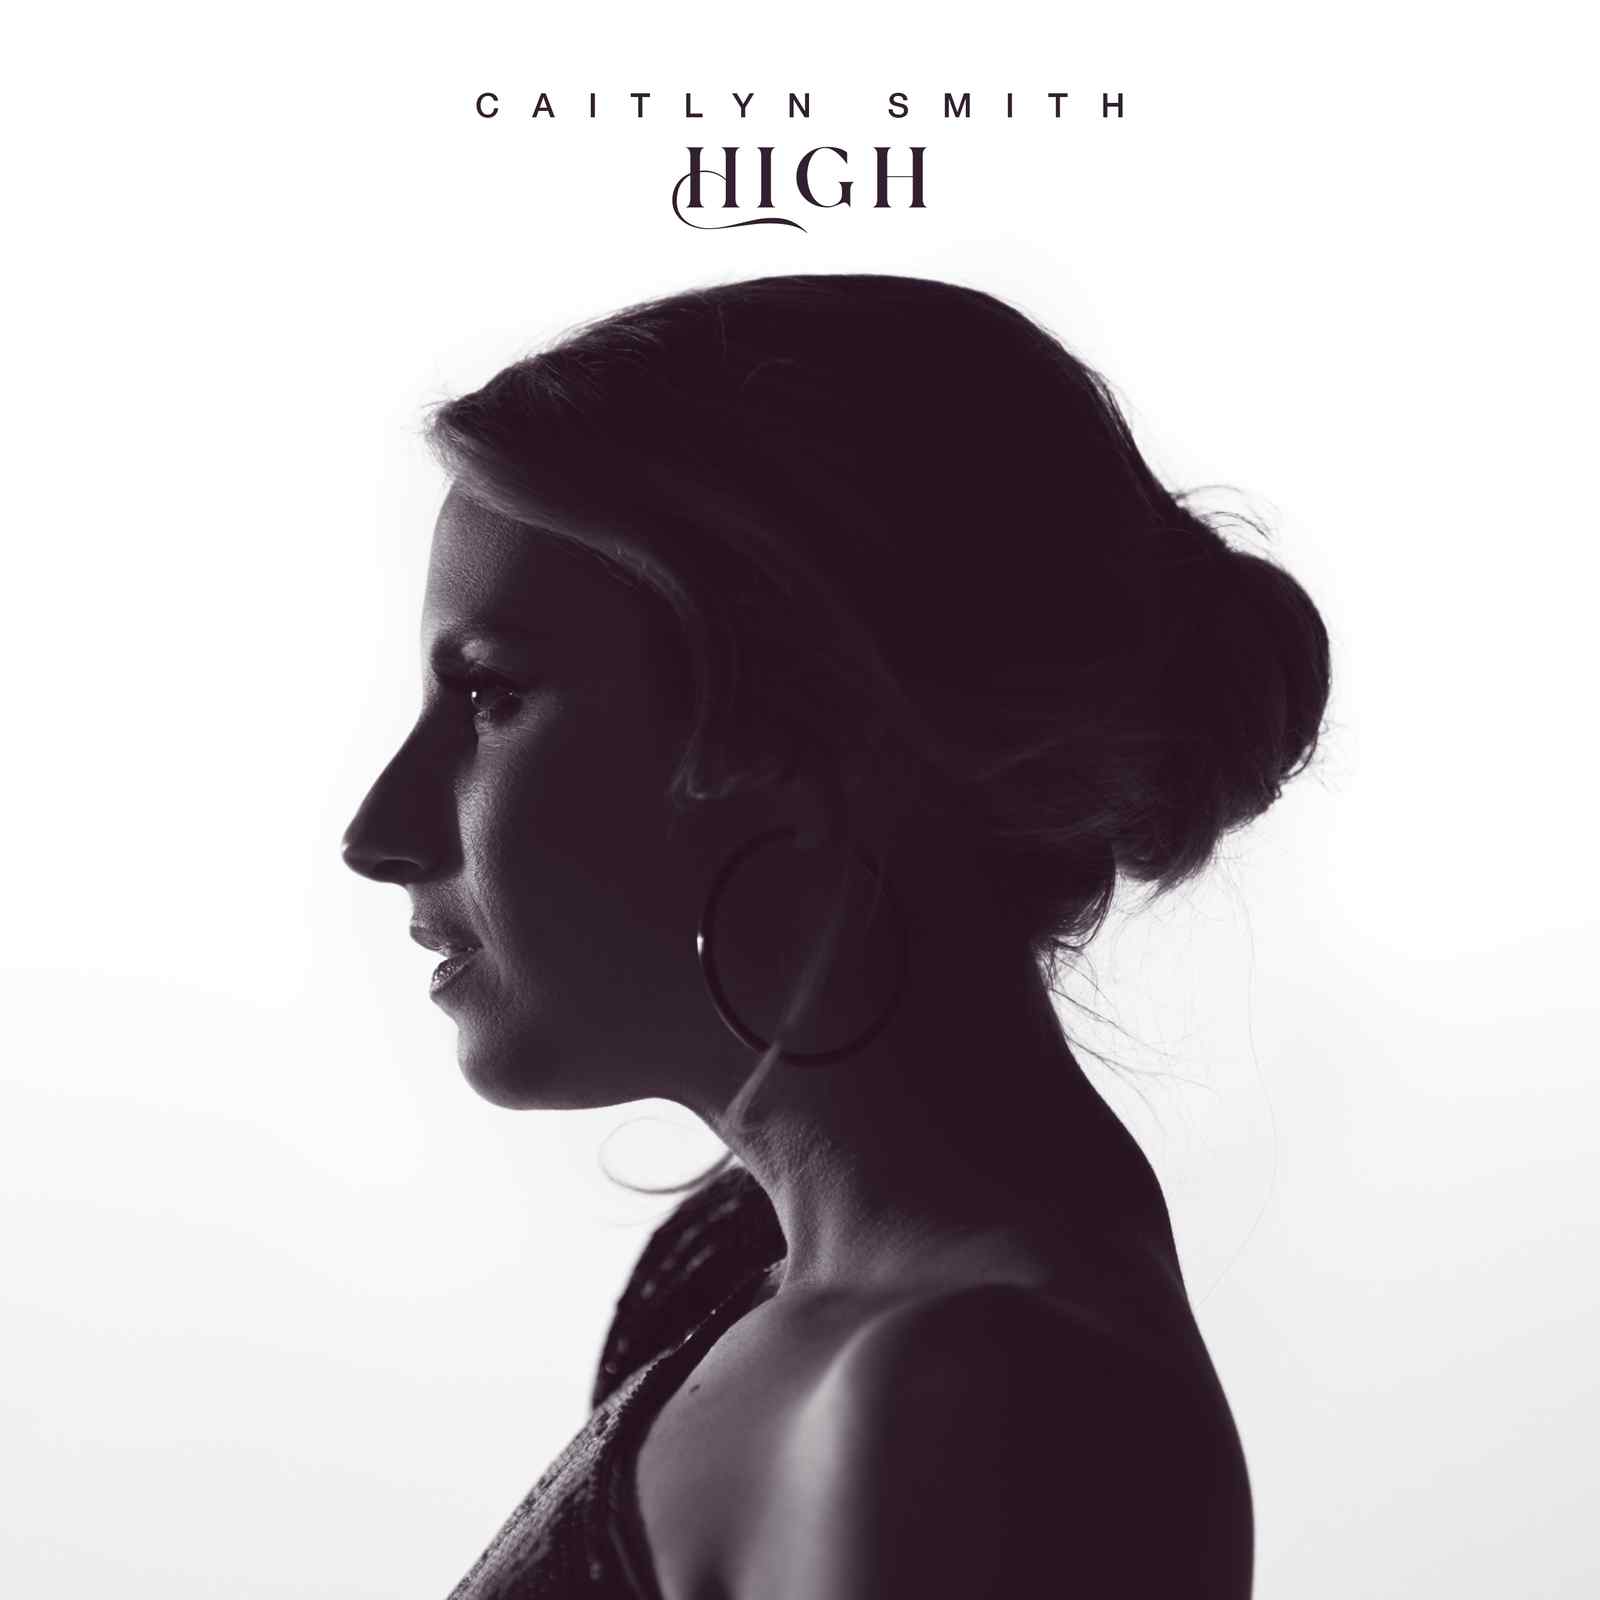 High by Caitlyn Smith